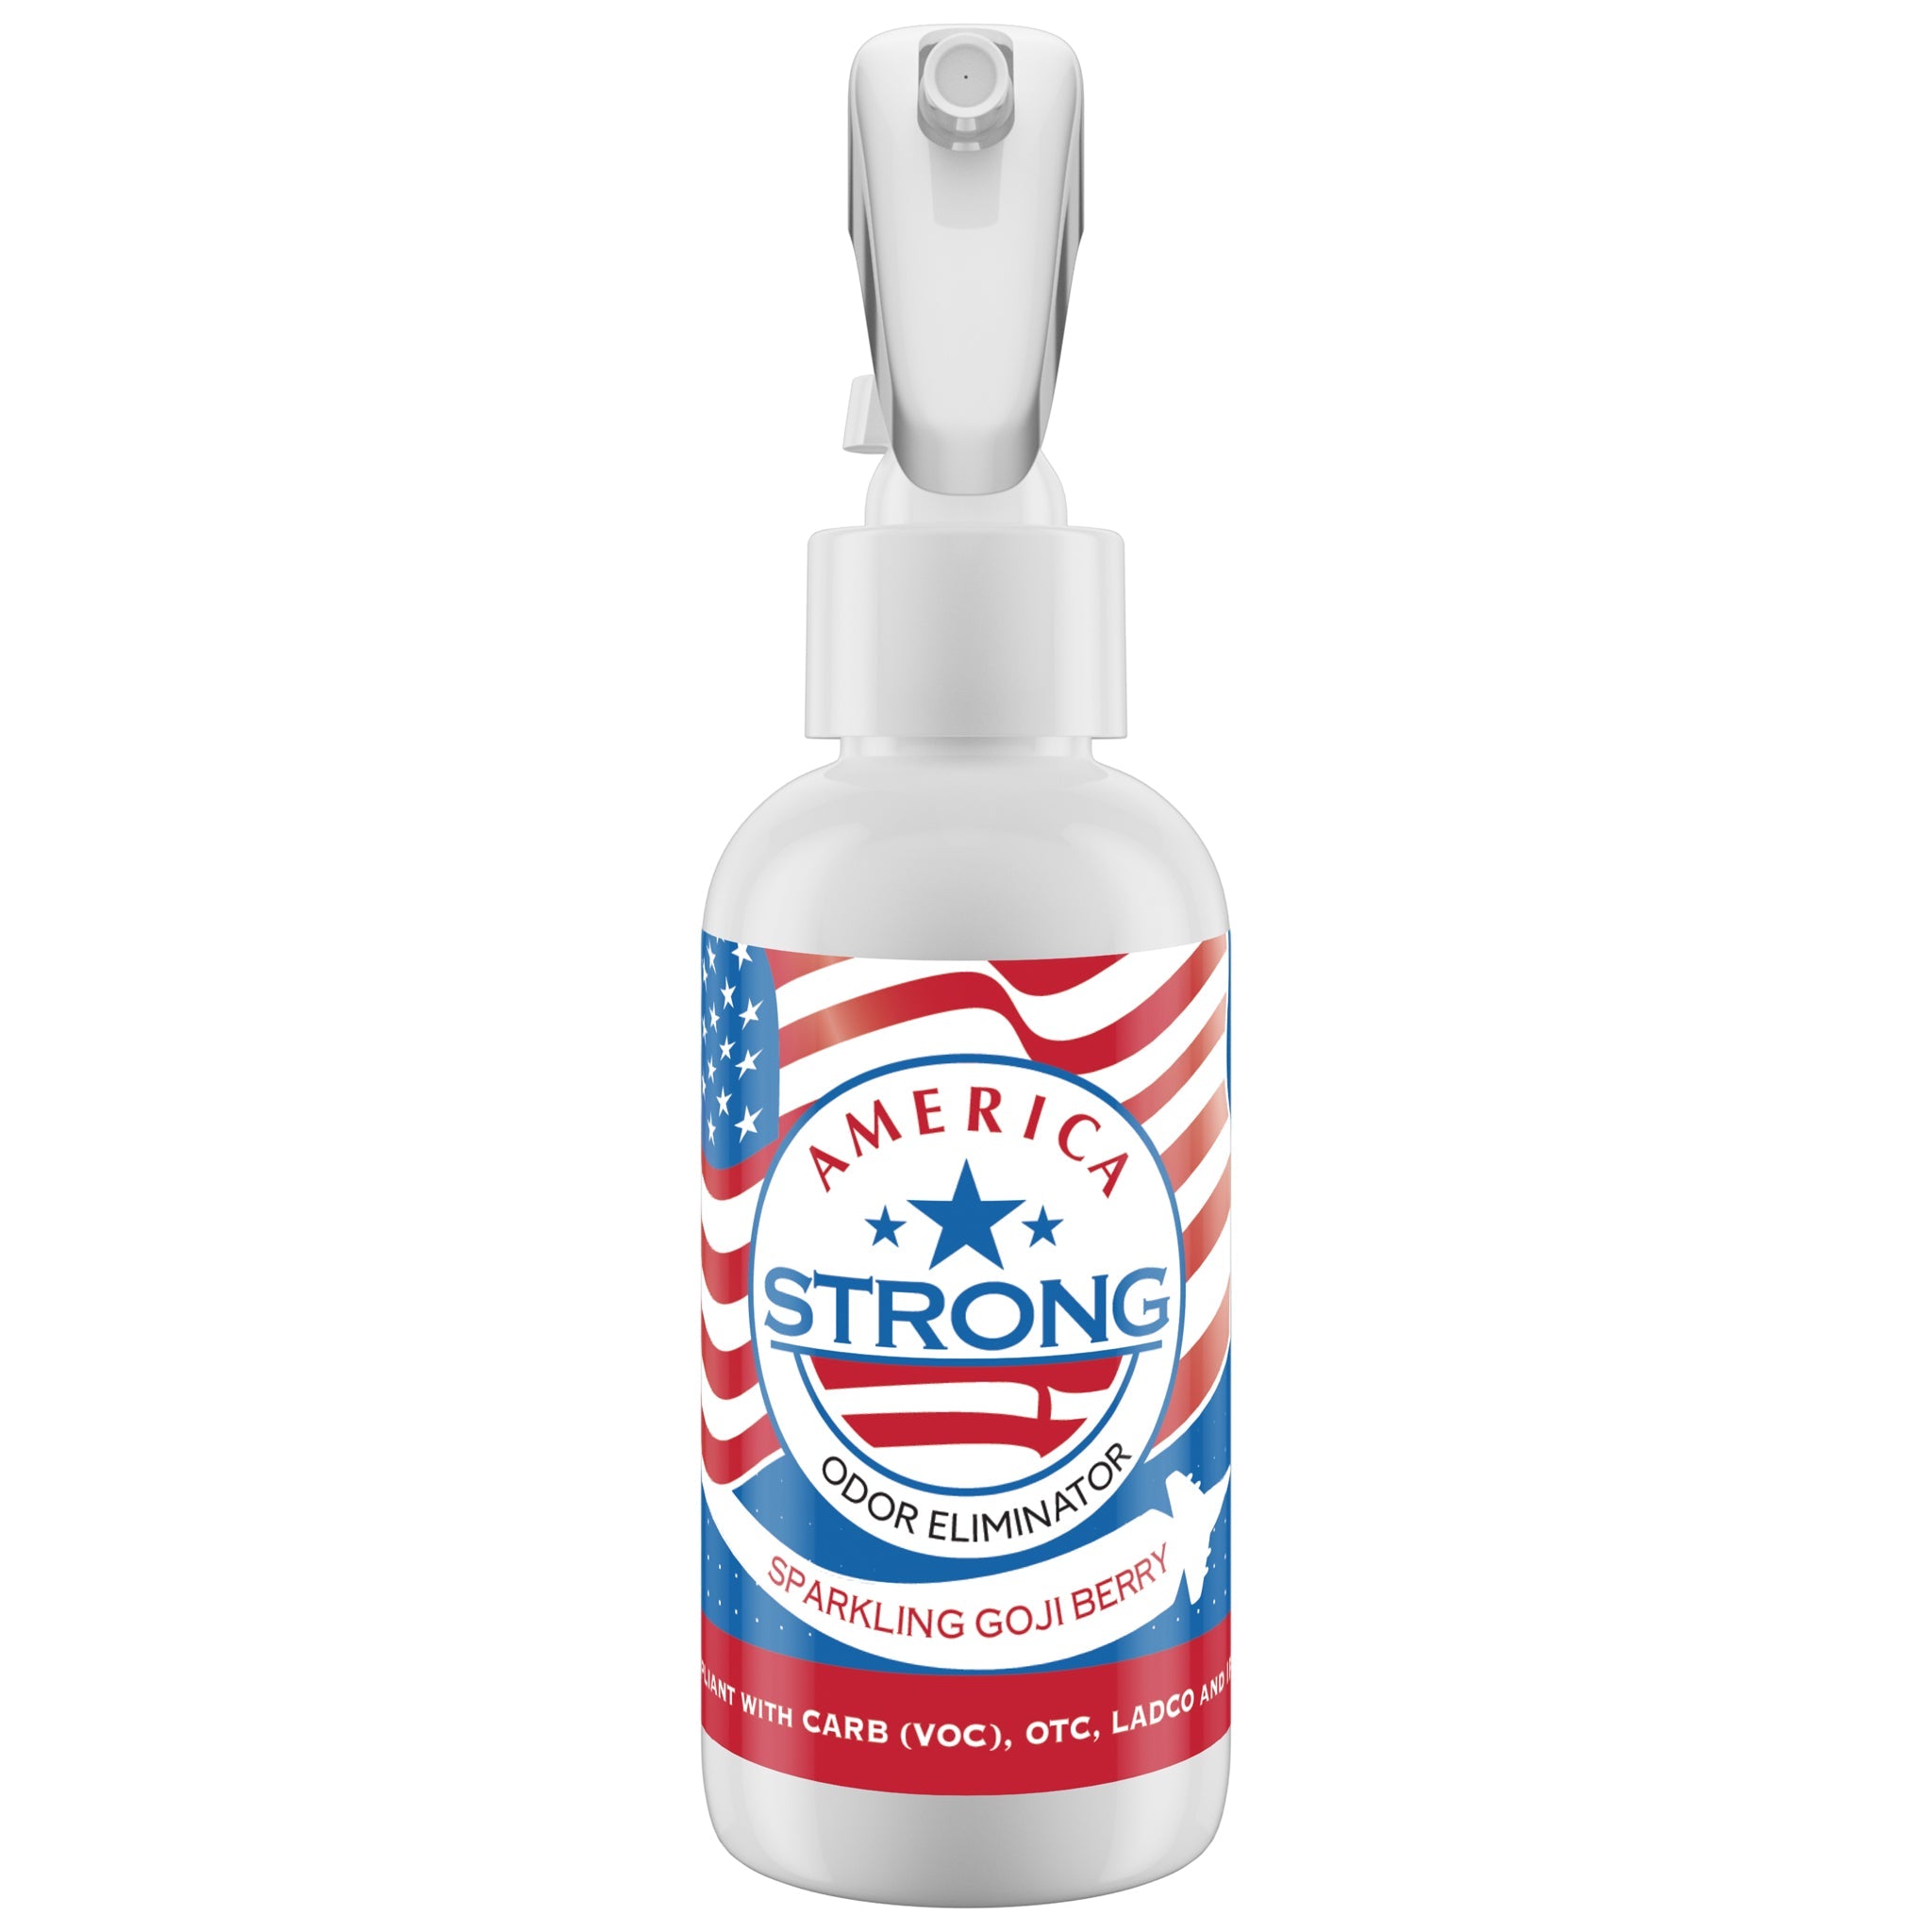 America Strong Odor Eliminator - Sparkling Goji Berry Scent Size: 4.0oz